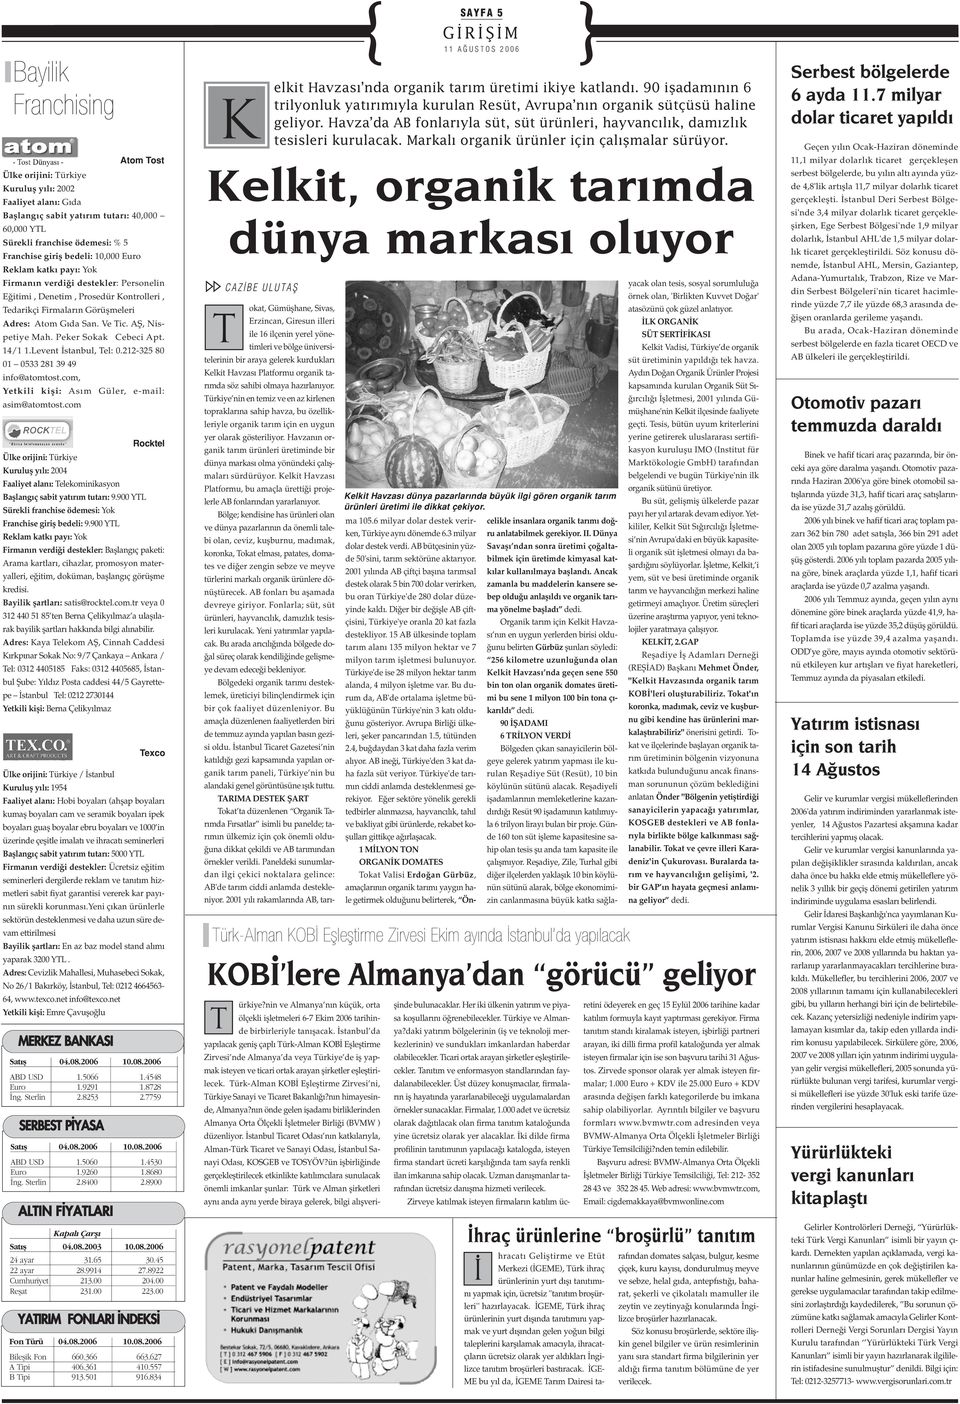 Peker Sokak Cebeci Apt. 14/1 1.Levent stanbul, el: 0.212-325 80 01 0533 281 39 49 info@atomtost.com, Yetkili kifli: As m Güler, e-mail: asim@atomtost.